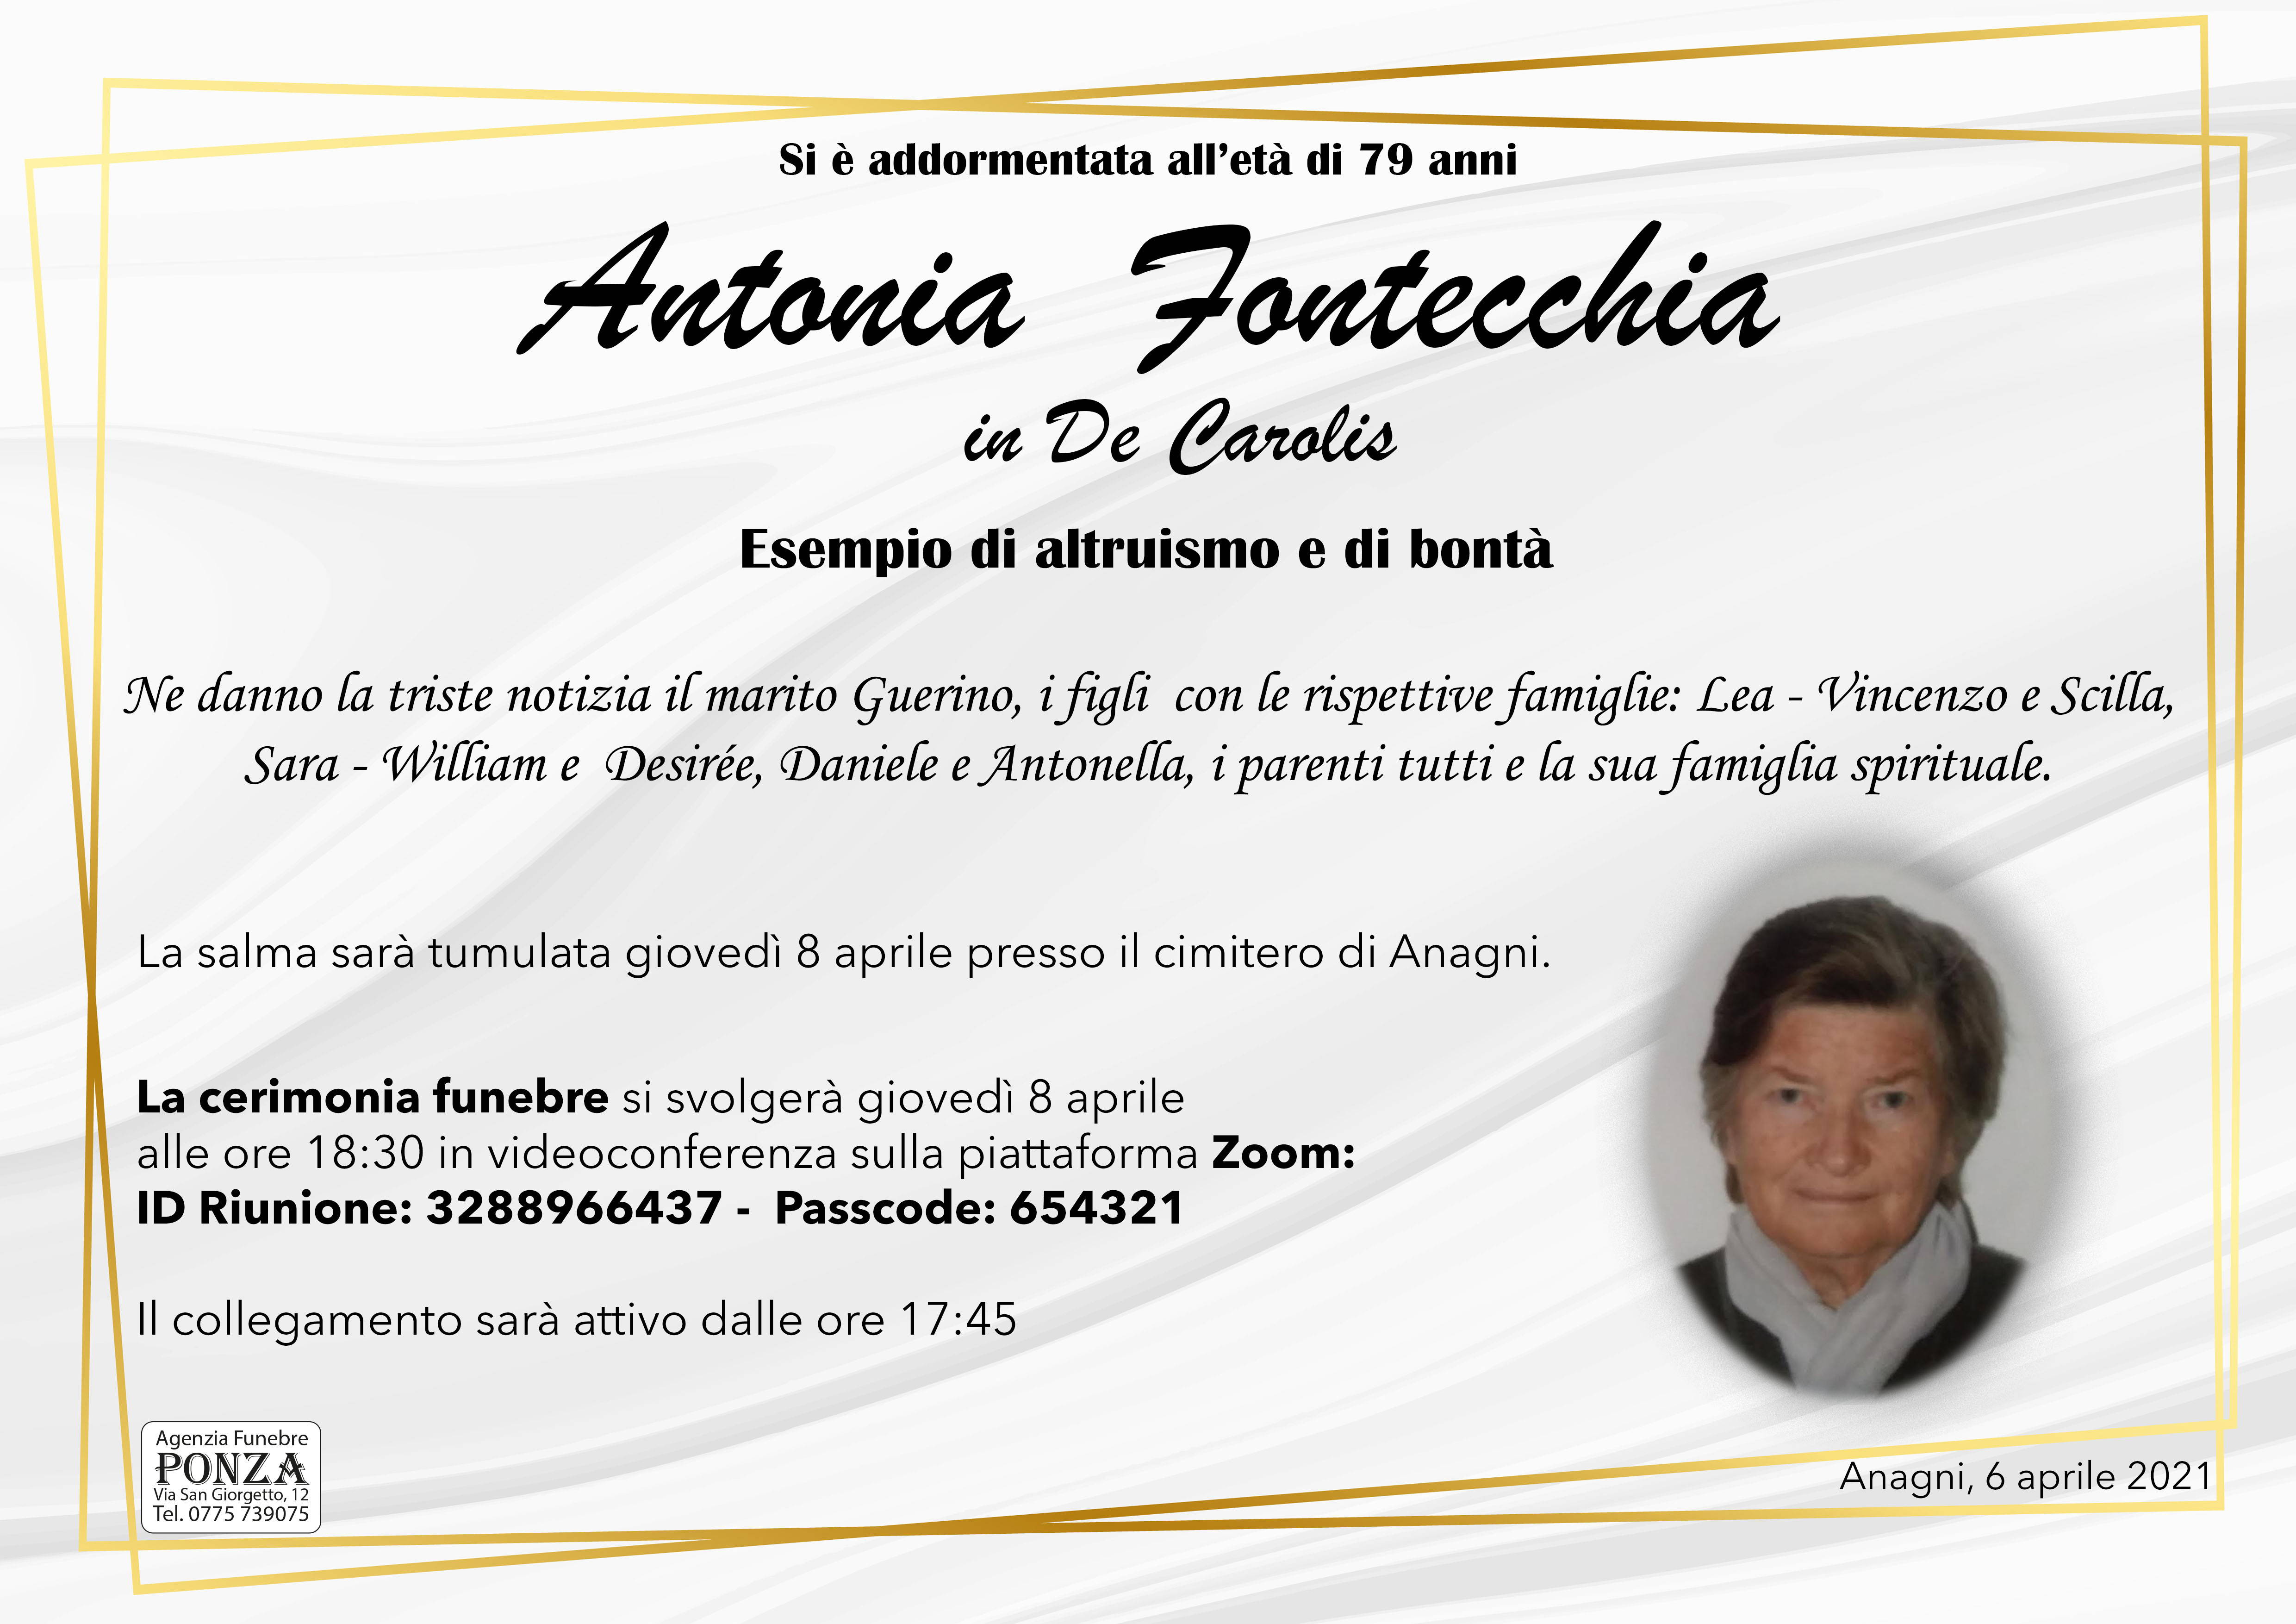 Antonia Fontecchia